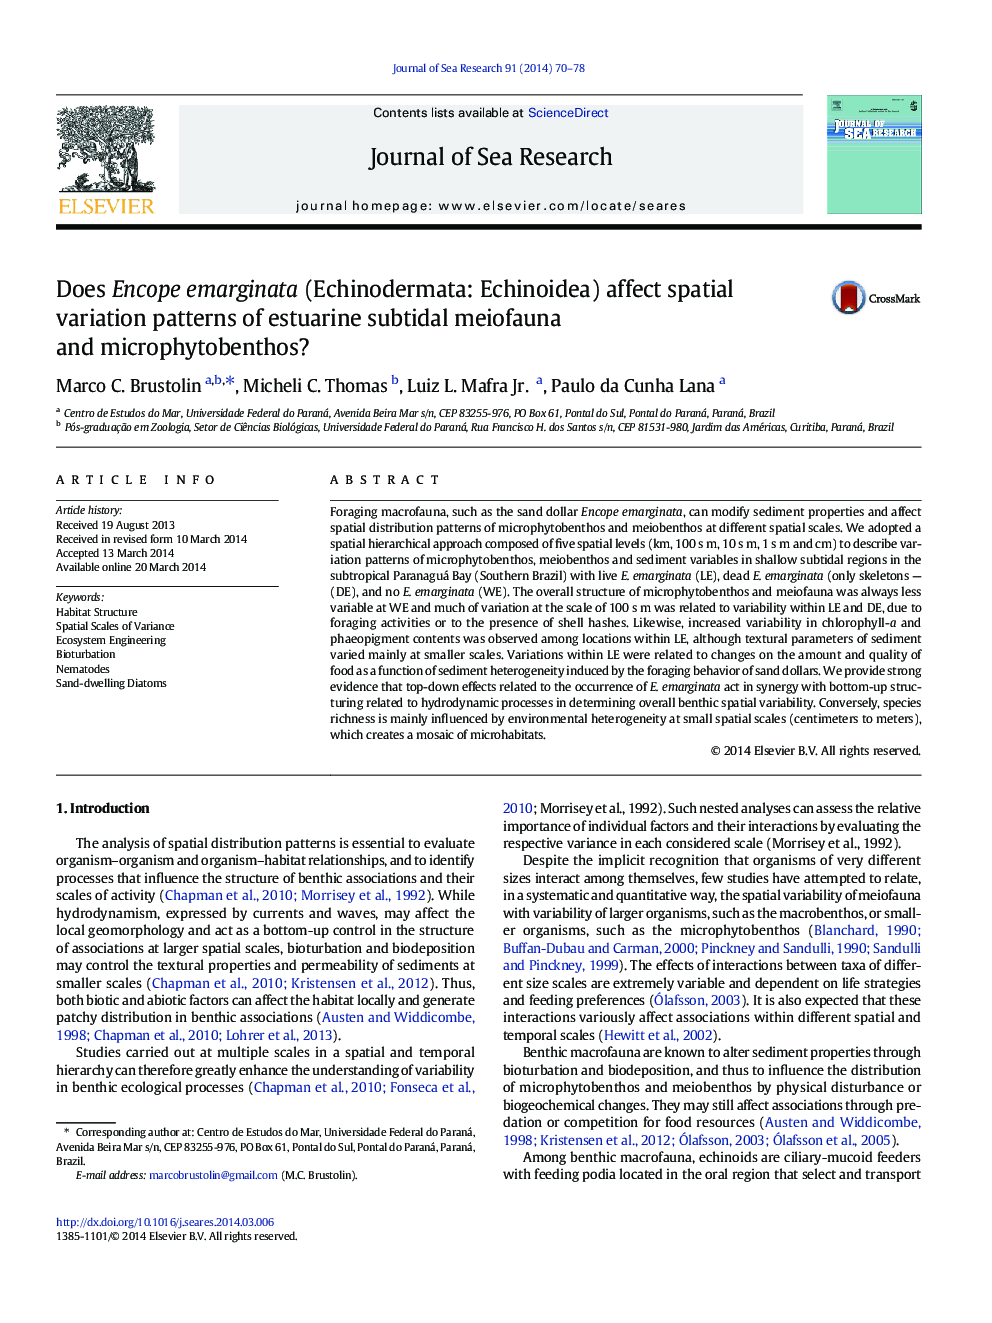 Does Encope emarginata (Echinodermata: Echinoidea) affect spatial variation patterns of estuarine subtidal meiofauna and microphytobenthos?